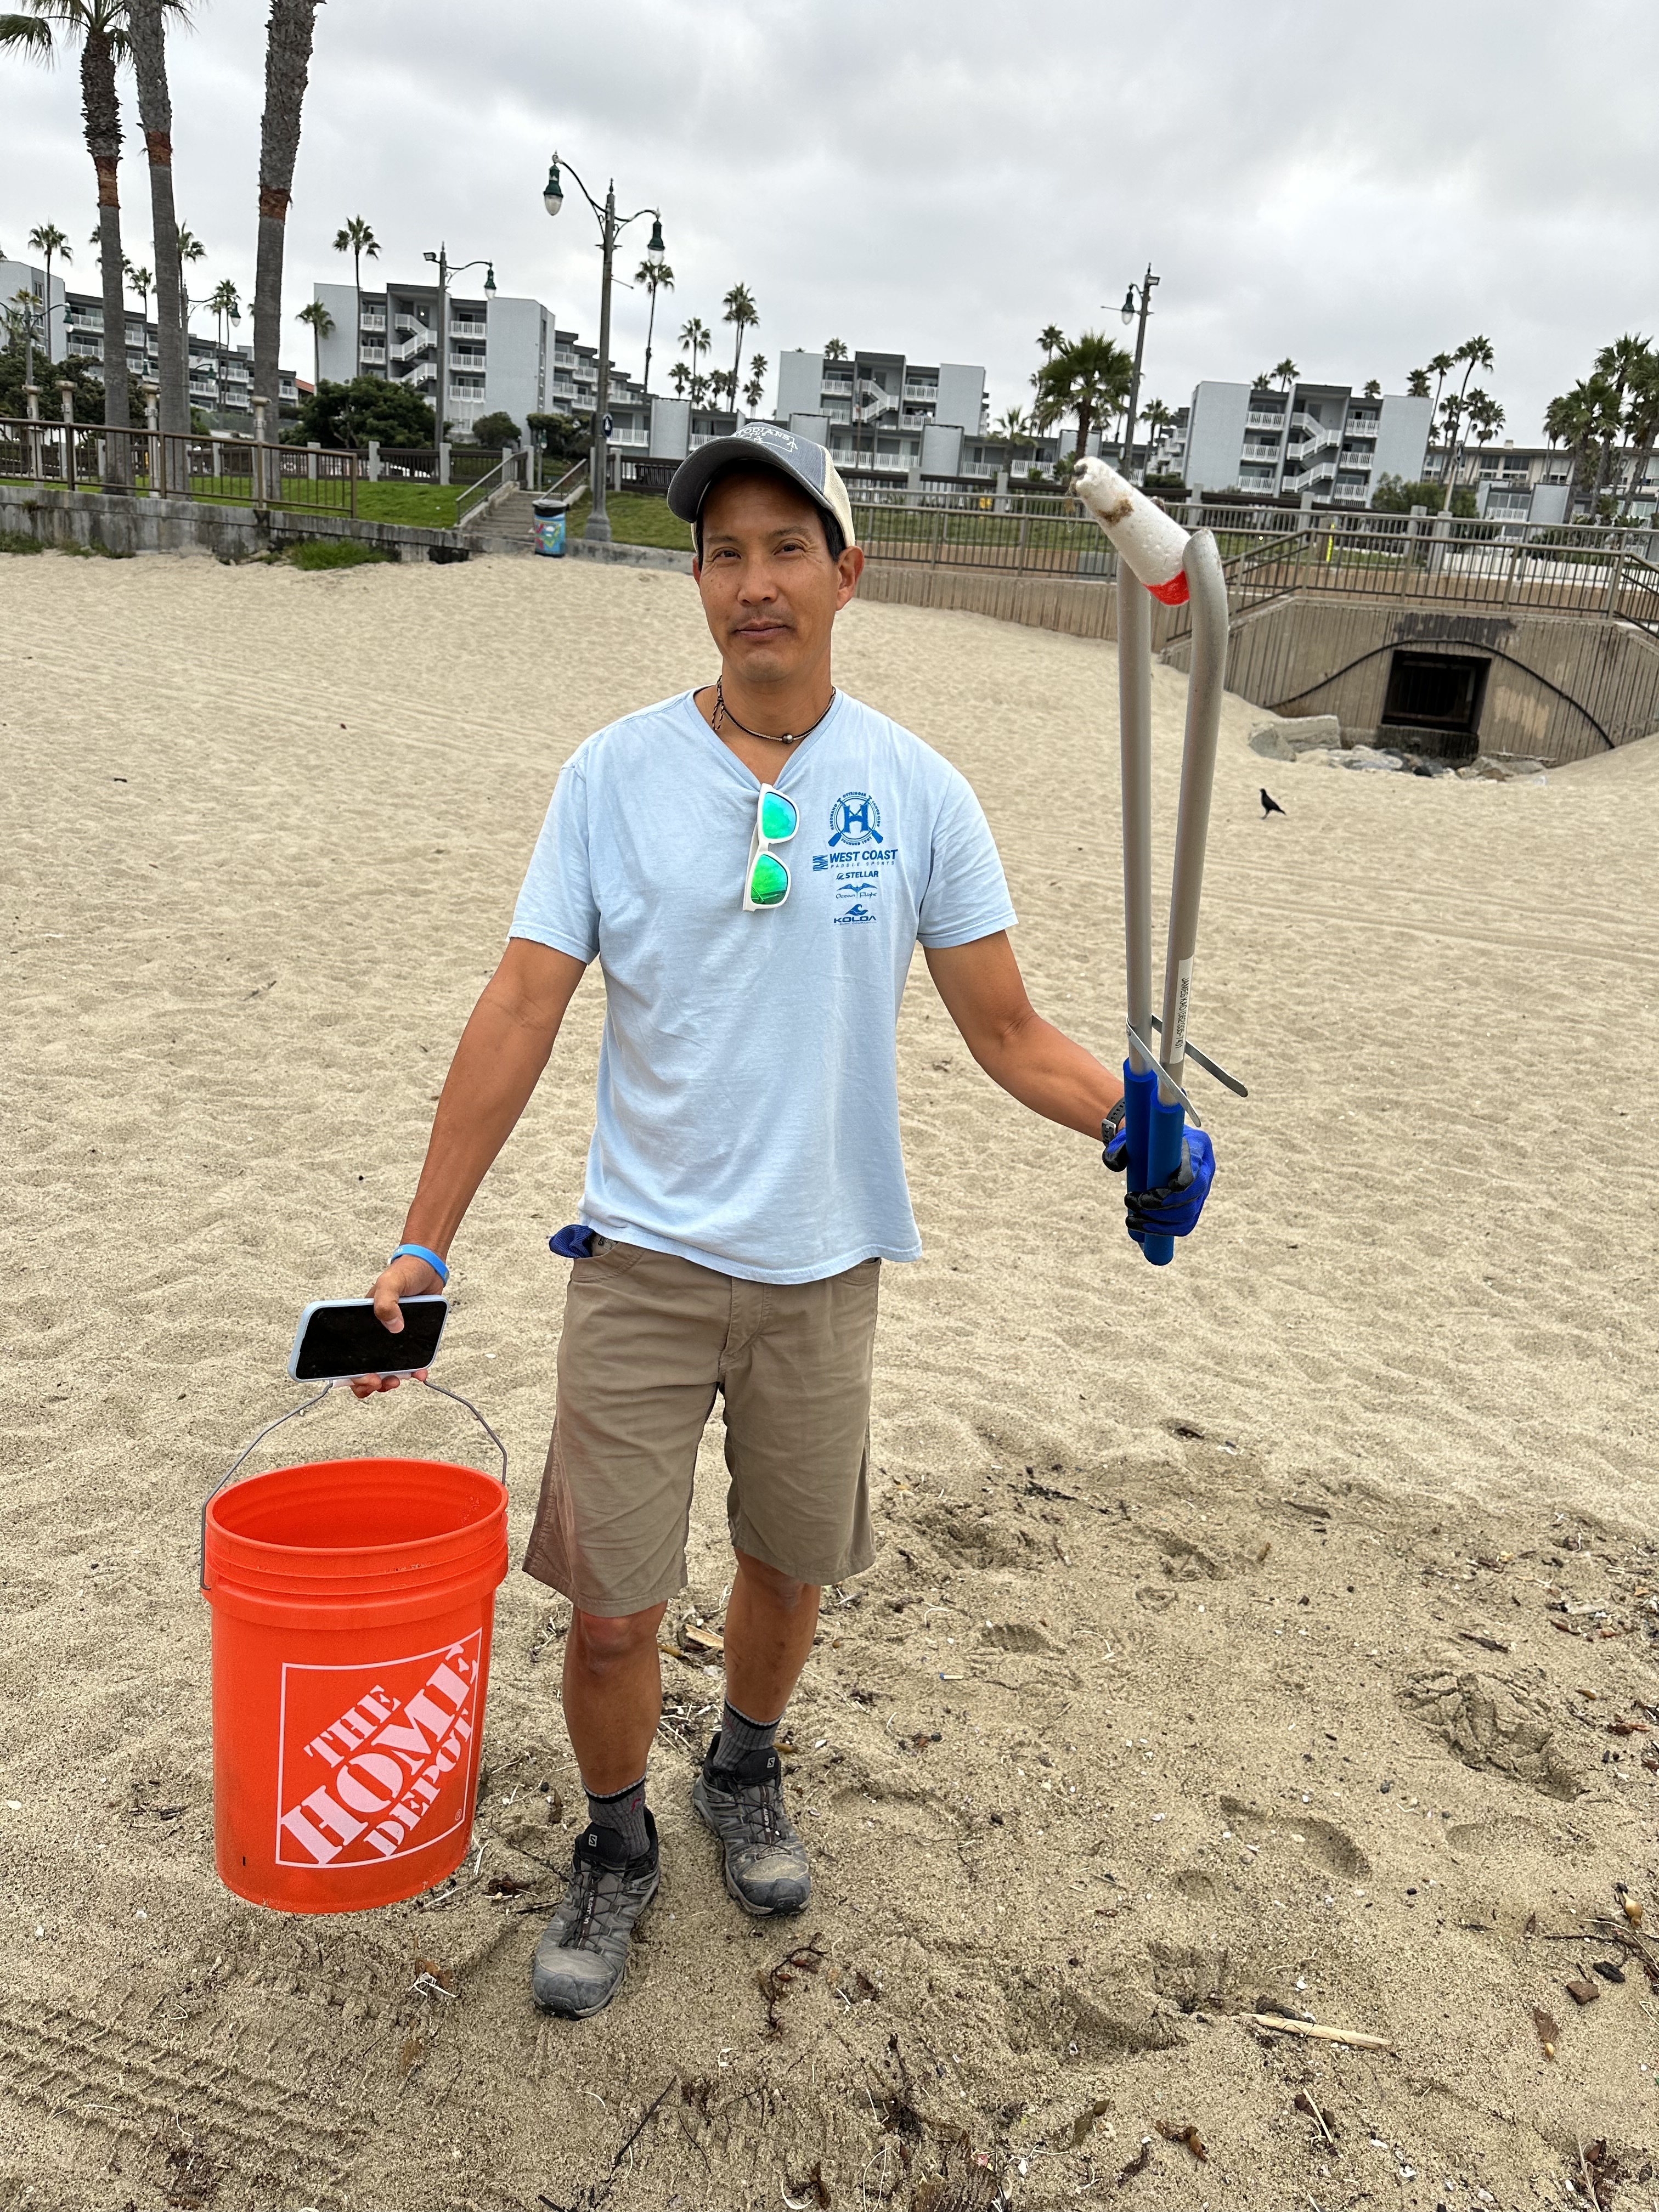 Cleaning up Redondo Beach (Paubox Community Service)